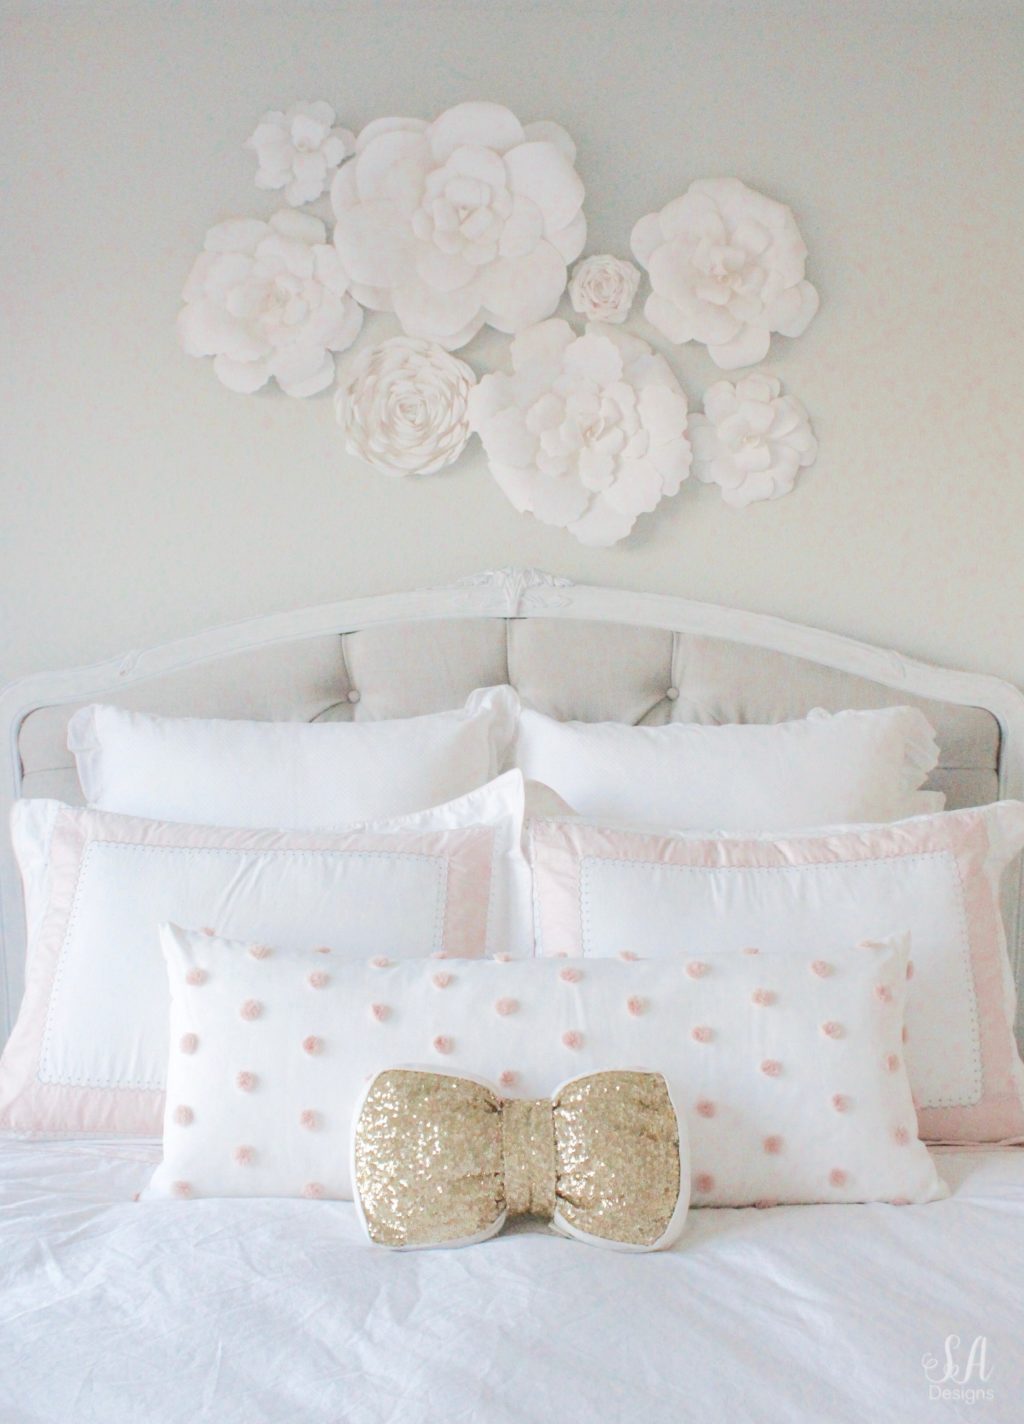 Chic Modern Blush Pink Bedroom Decor